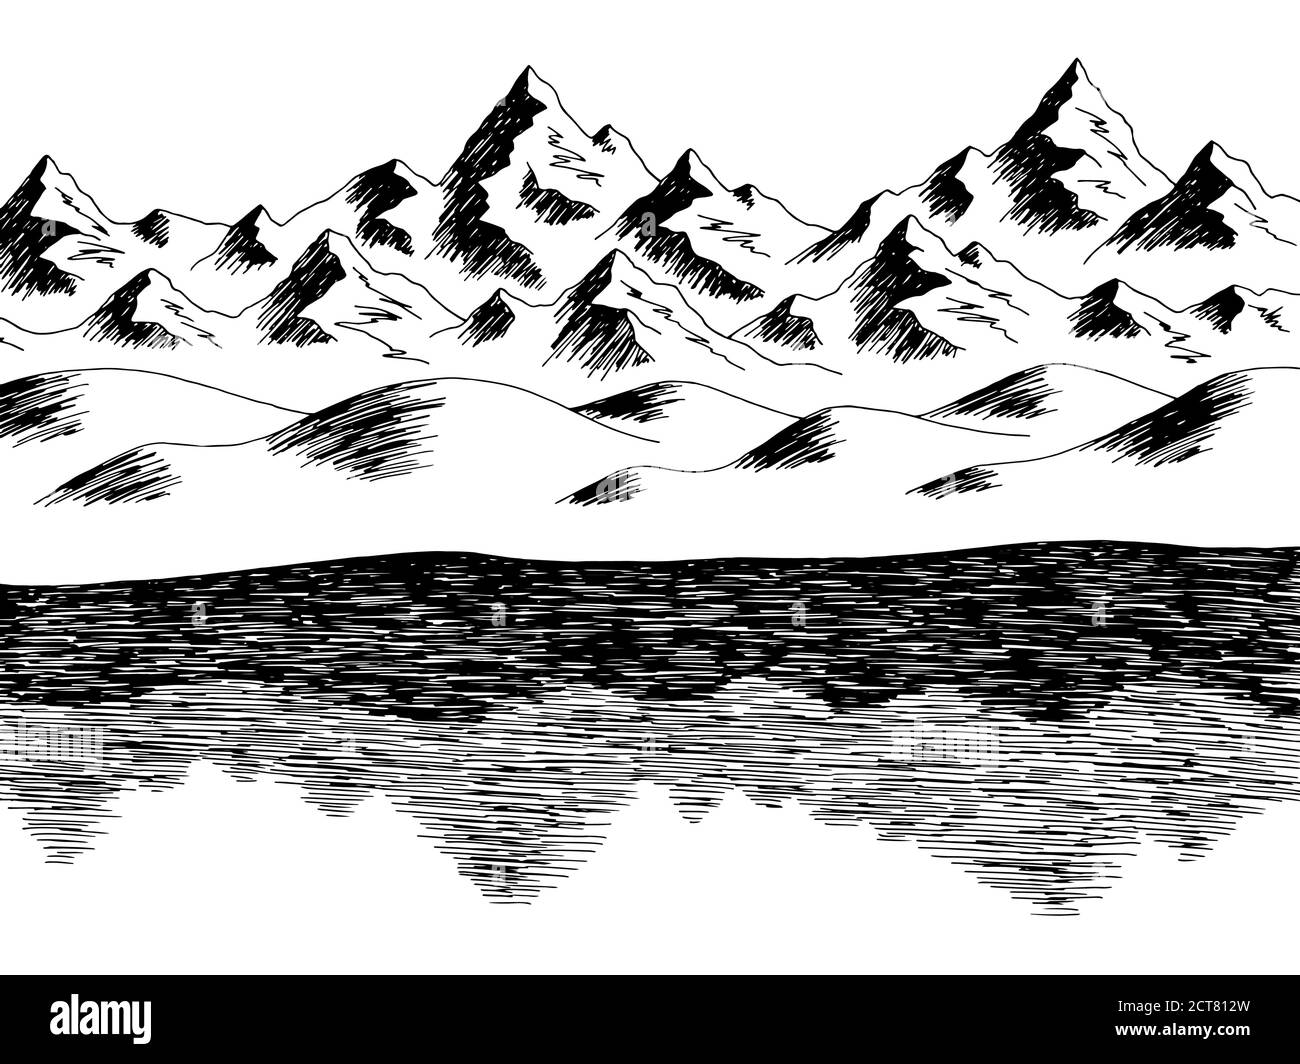 Berg See Grafik schwarz weiß Landschaft Skizze Illustration Vektor Stock Vektor